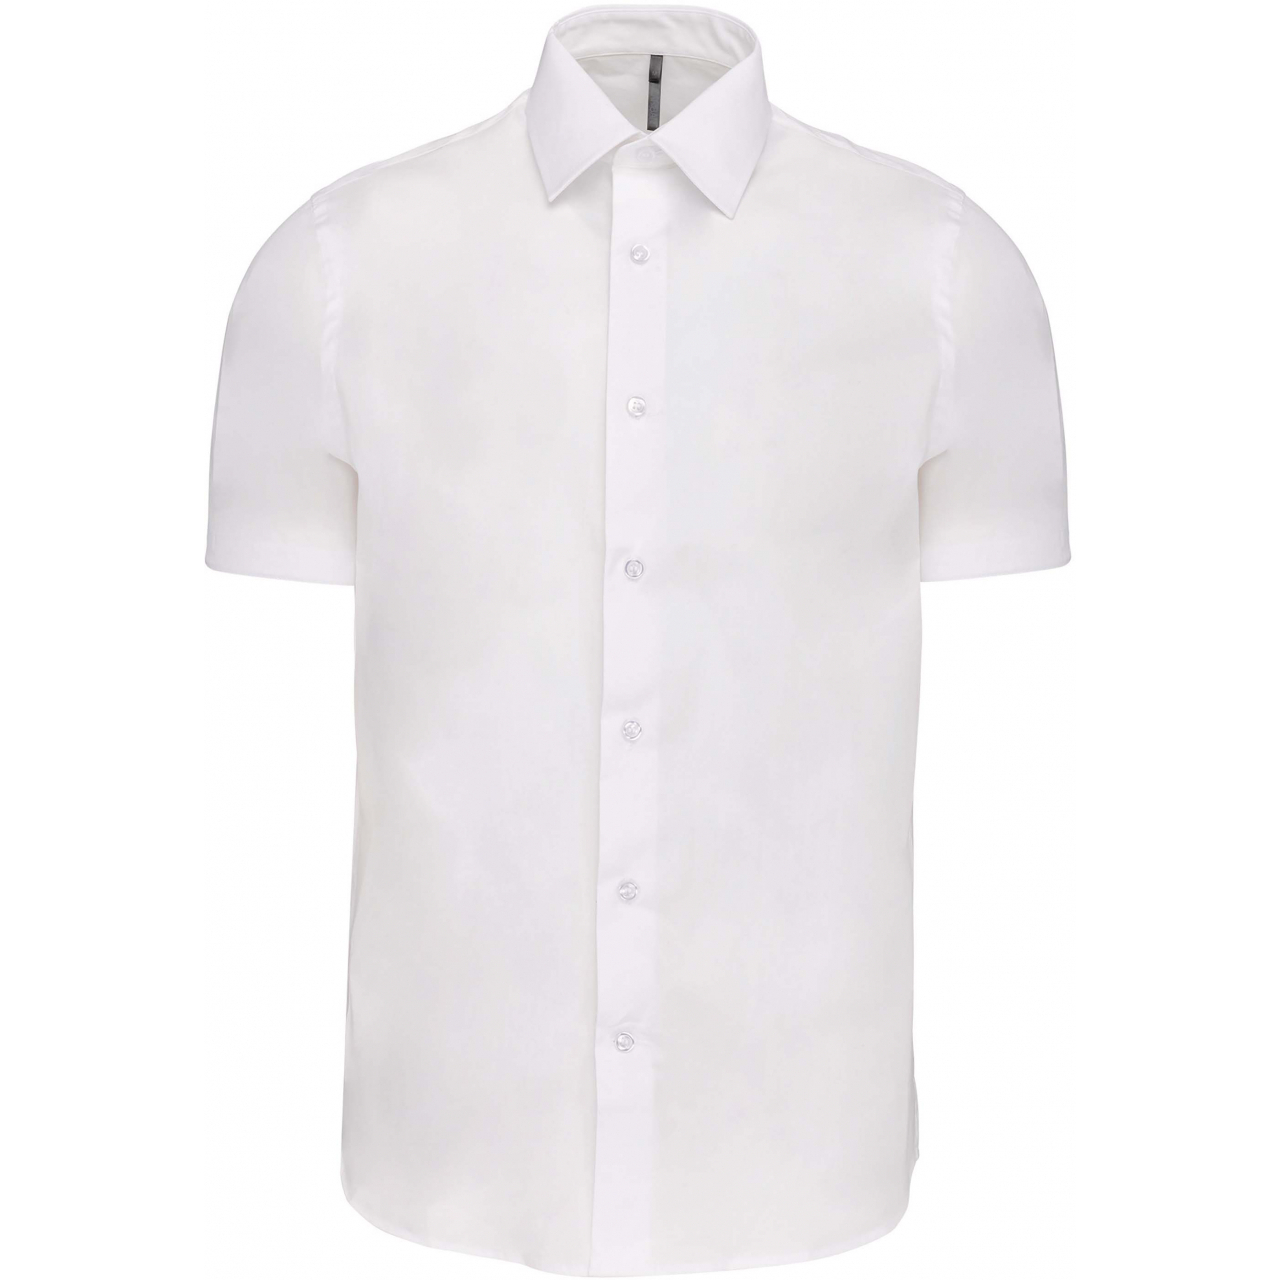 Pánská košile s krátkým rukávem Kariban strečová - bílá, XL